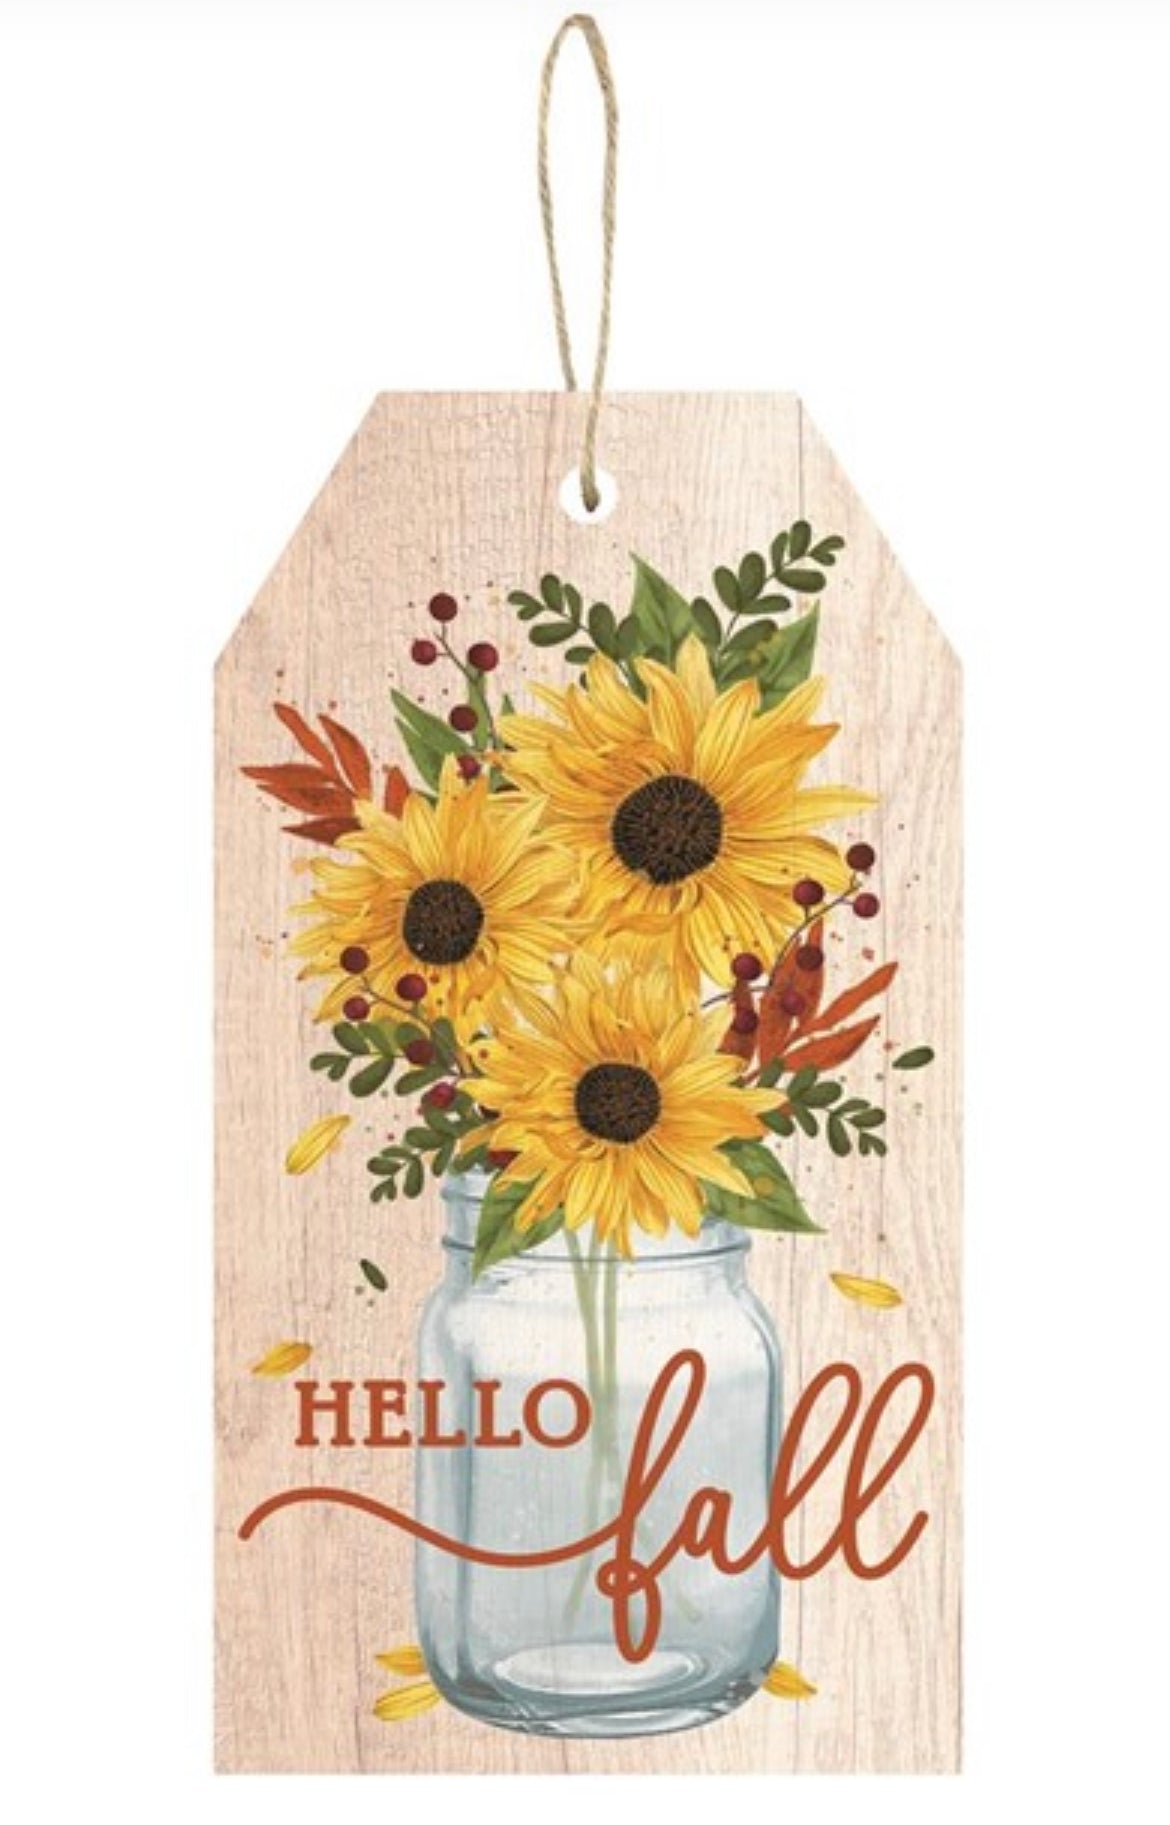 Hello fall sunflower sign - Greenery Marketsigns for wreathsAP8794